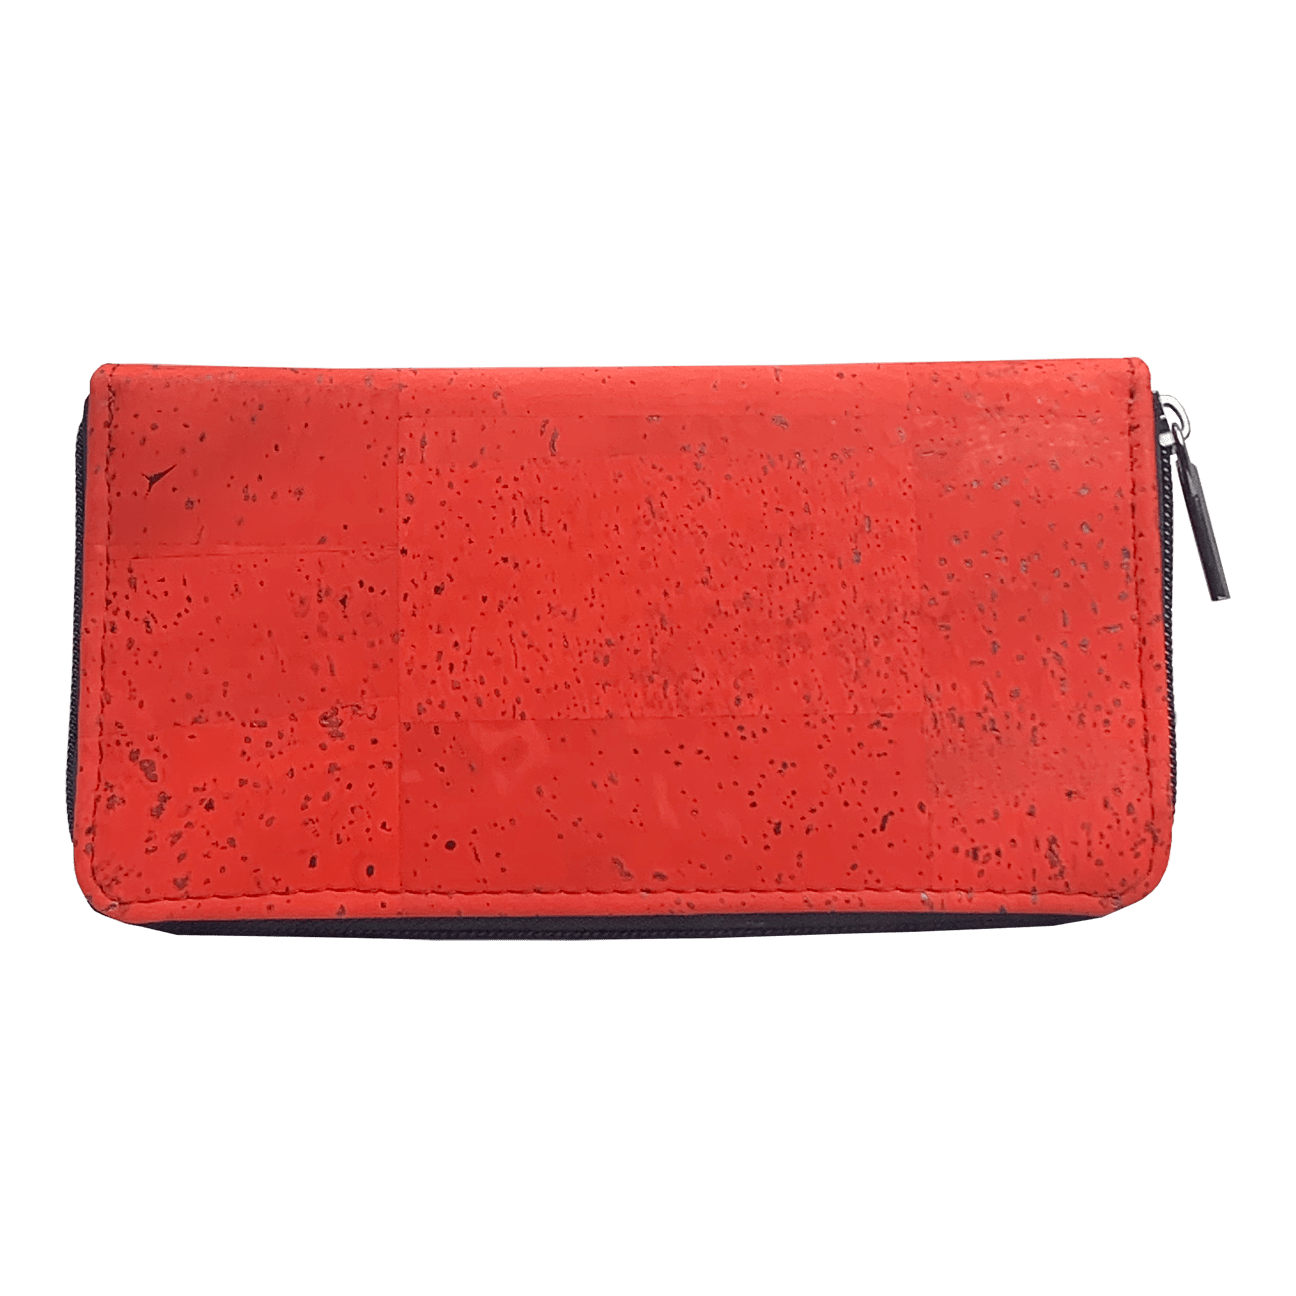 CorkHouse Wallet Red Zip Around Cork Wallet